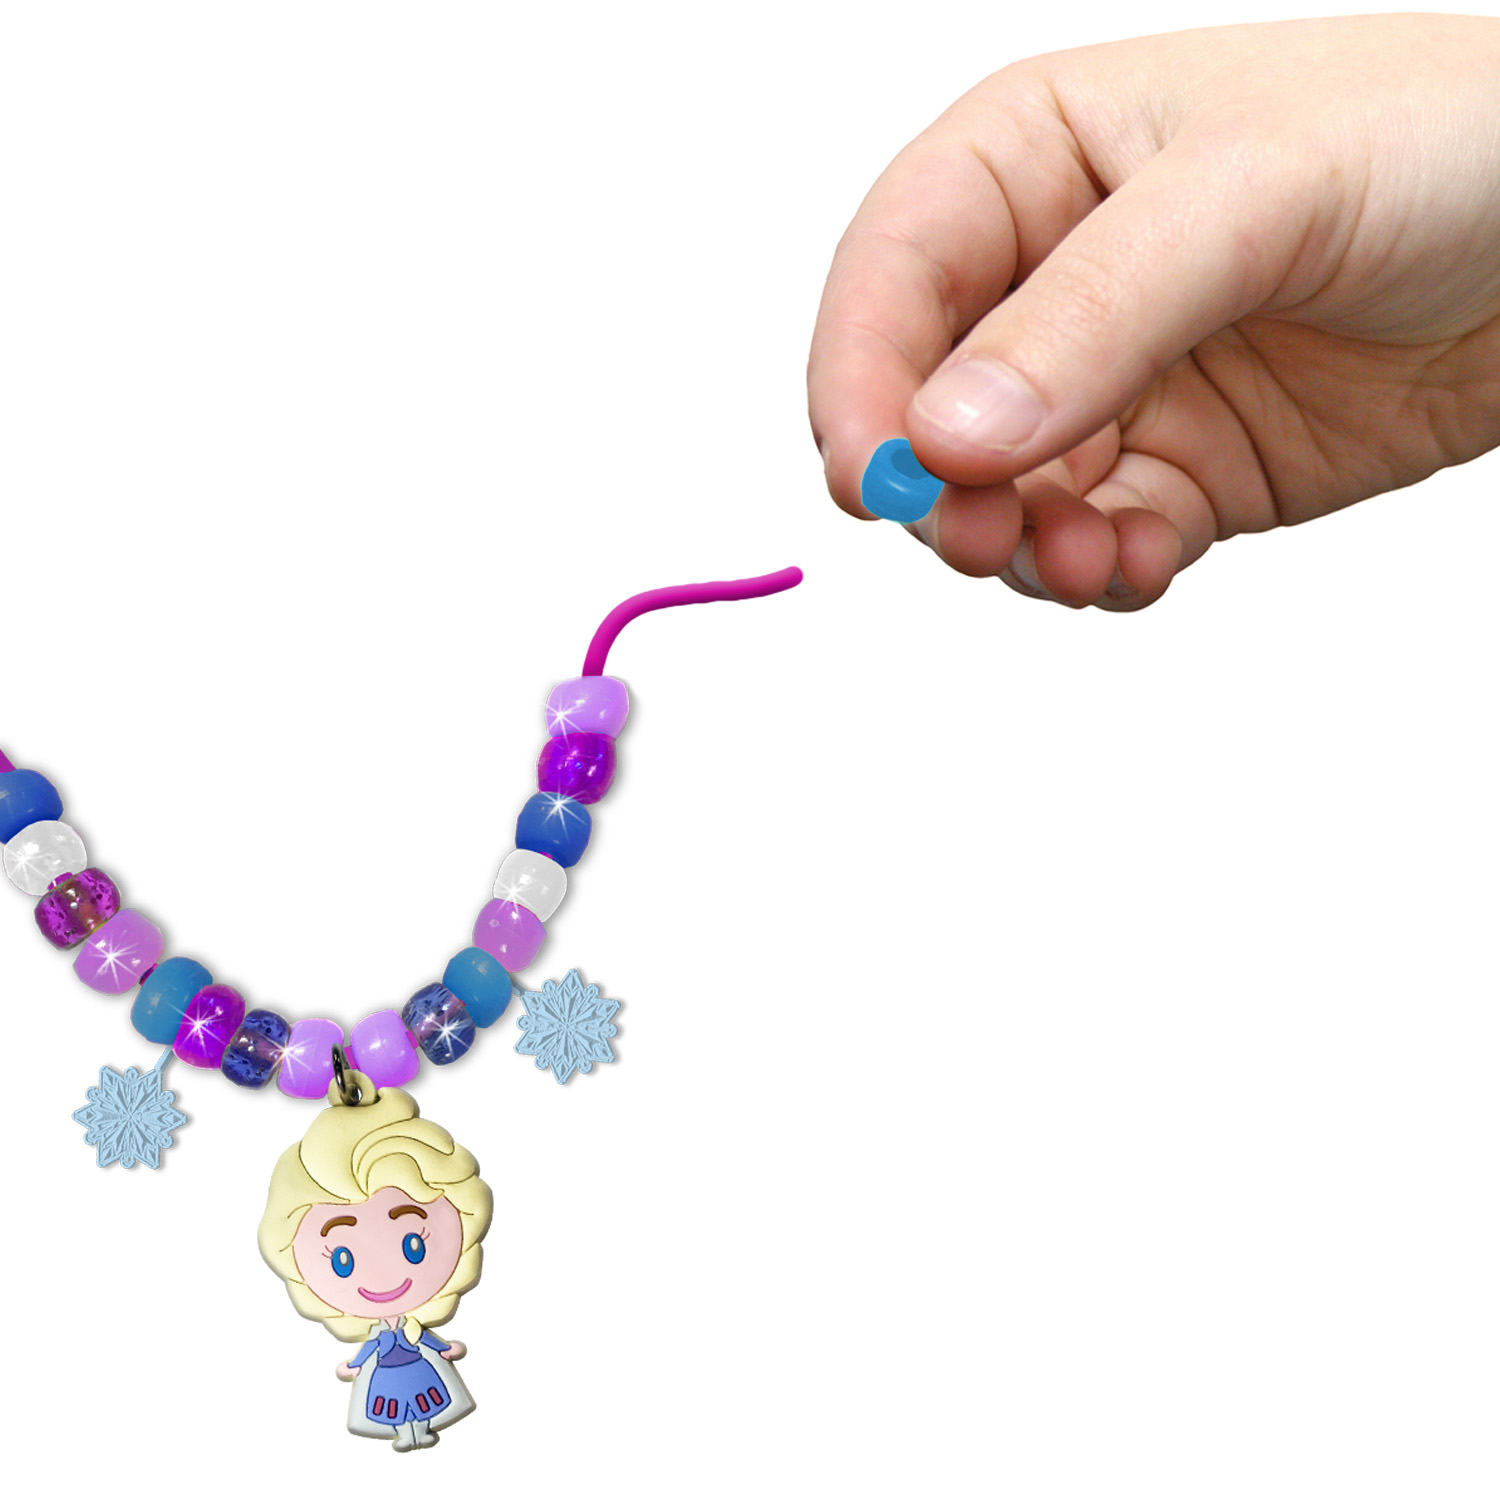 Disney Frozen 2 Plastic Jewelry Activity Set - multi character, multicolored - image 3 of 5